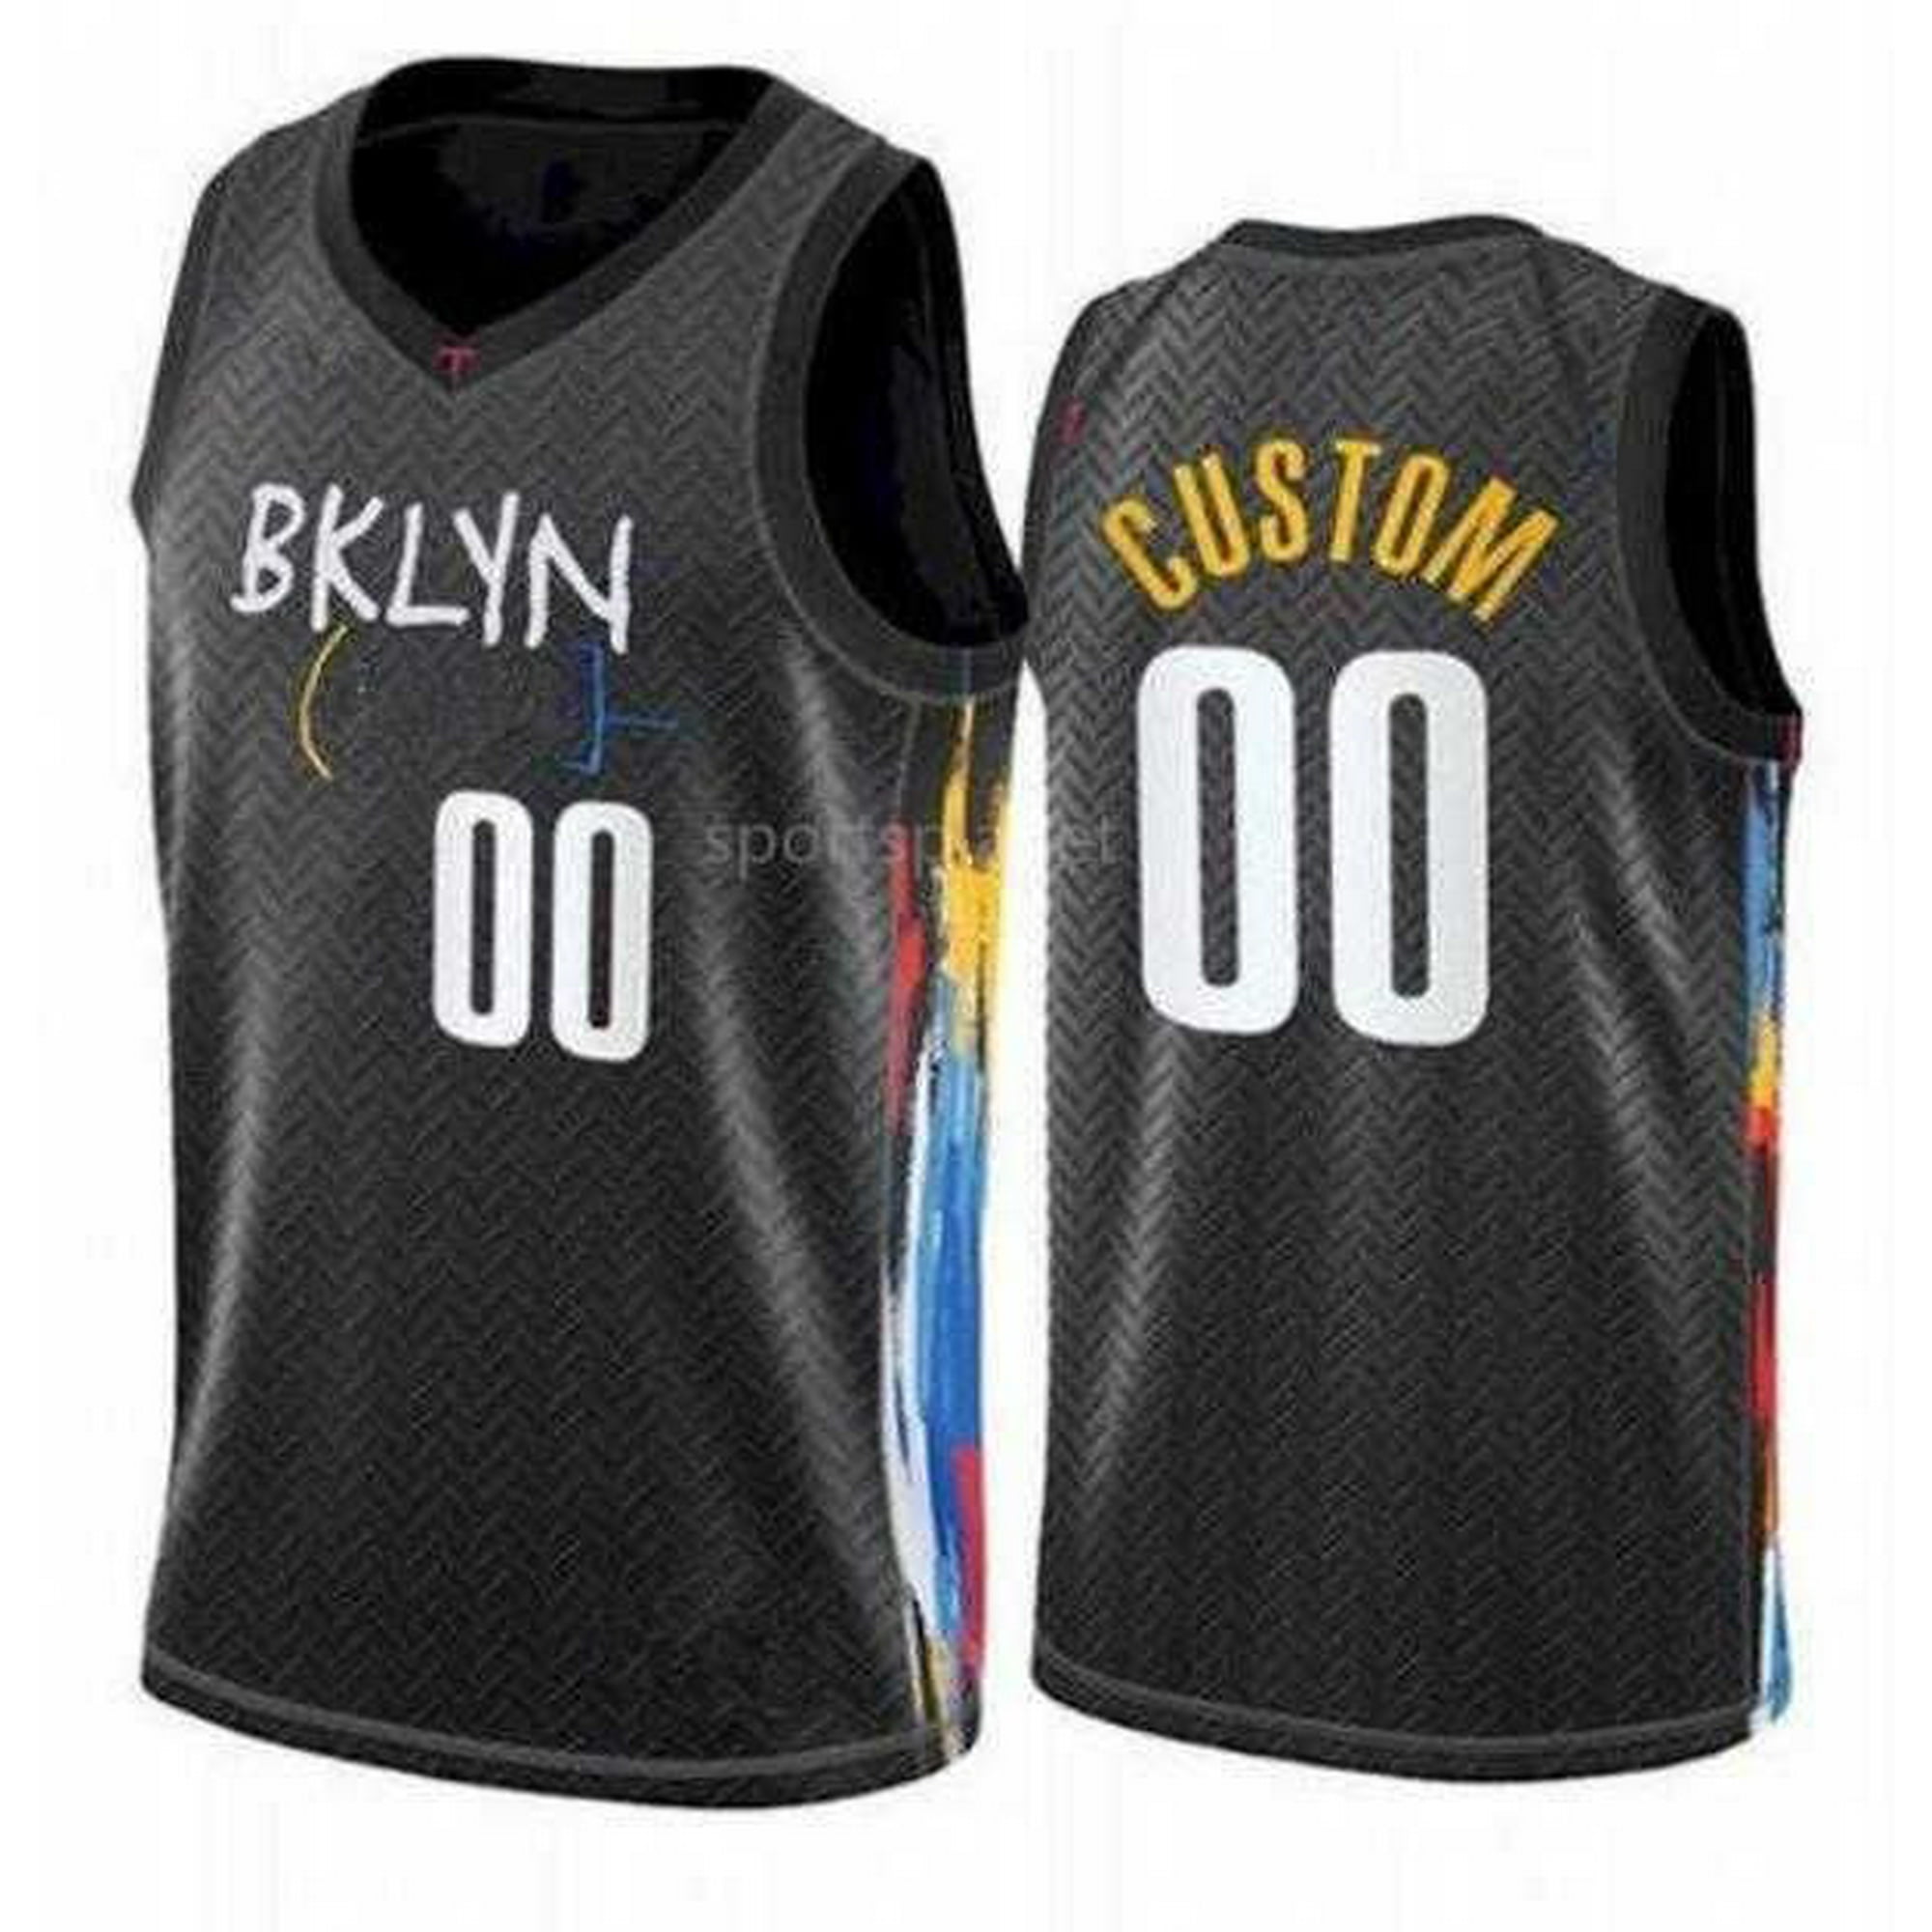 Nike Kyrie 5 NBA Shirt - High-Quality Printed Brand